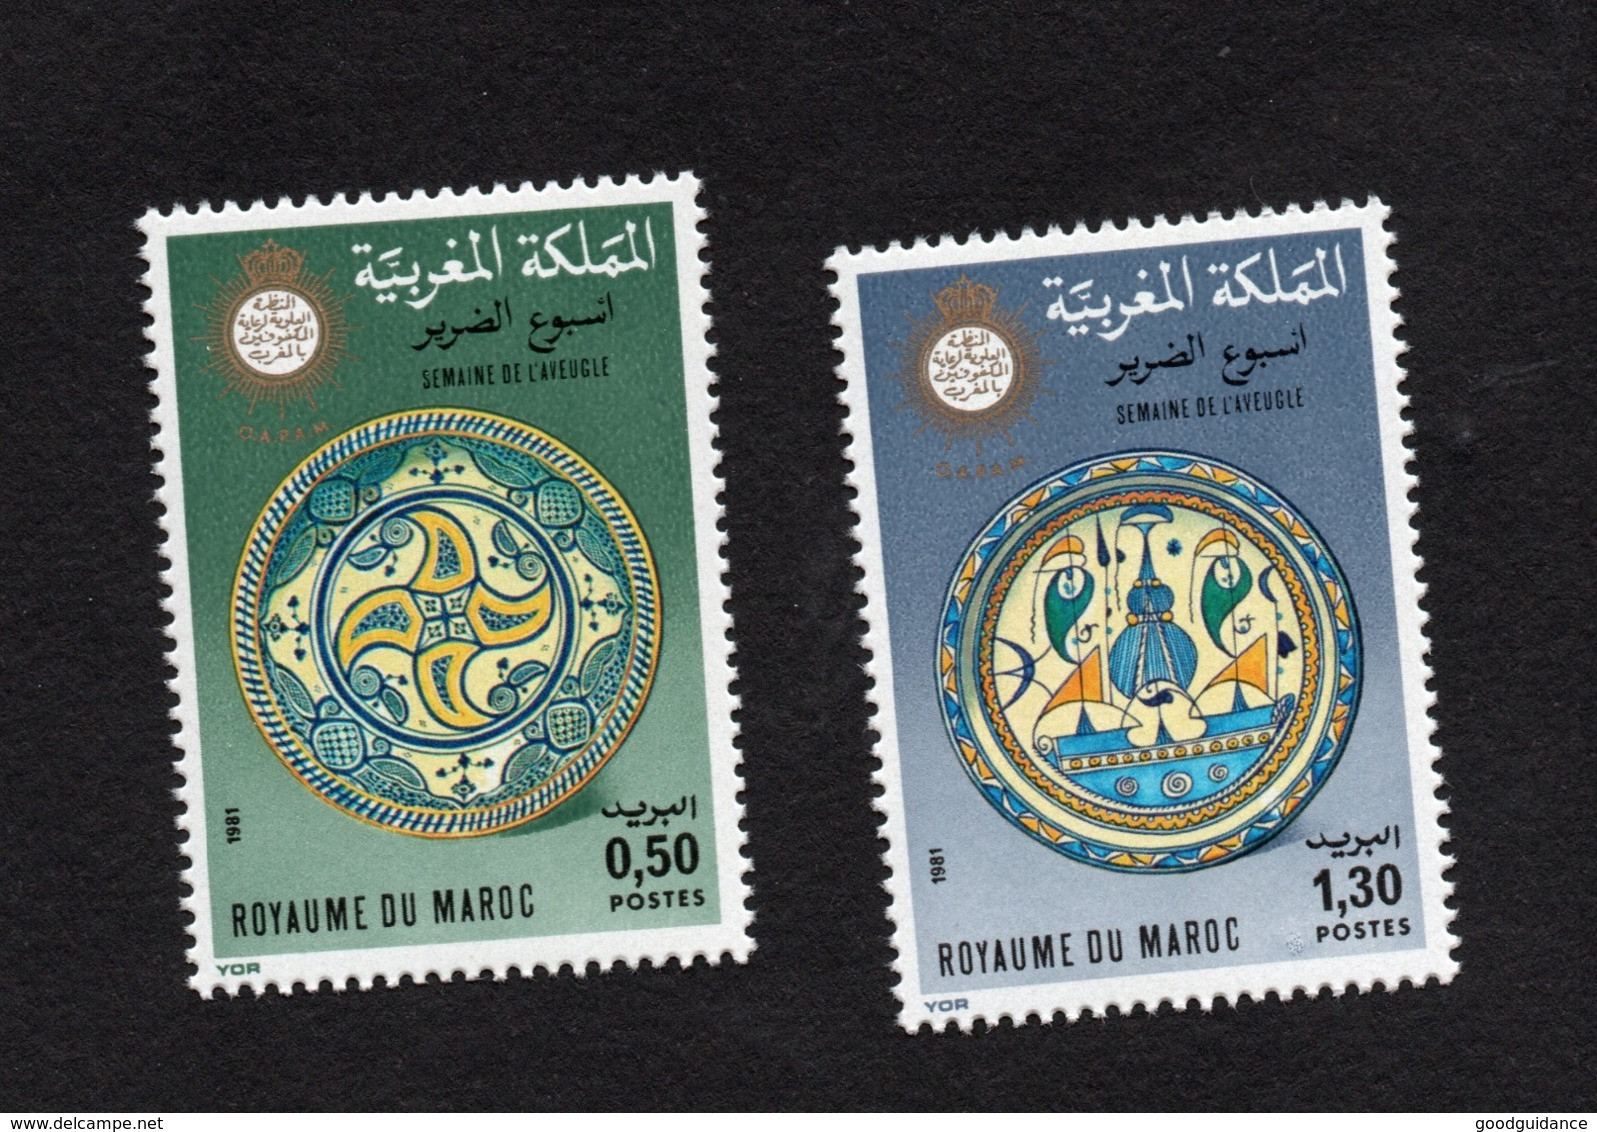 1981- Morocco - Maroc - Blind Week- Seamaine De L'aveugle - Complete Set 2v.MNH** - Malattie